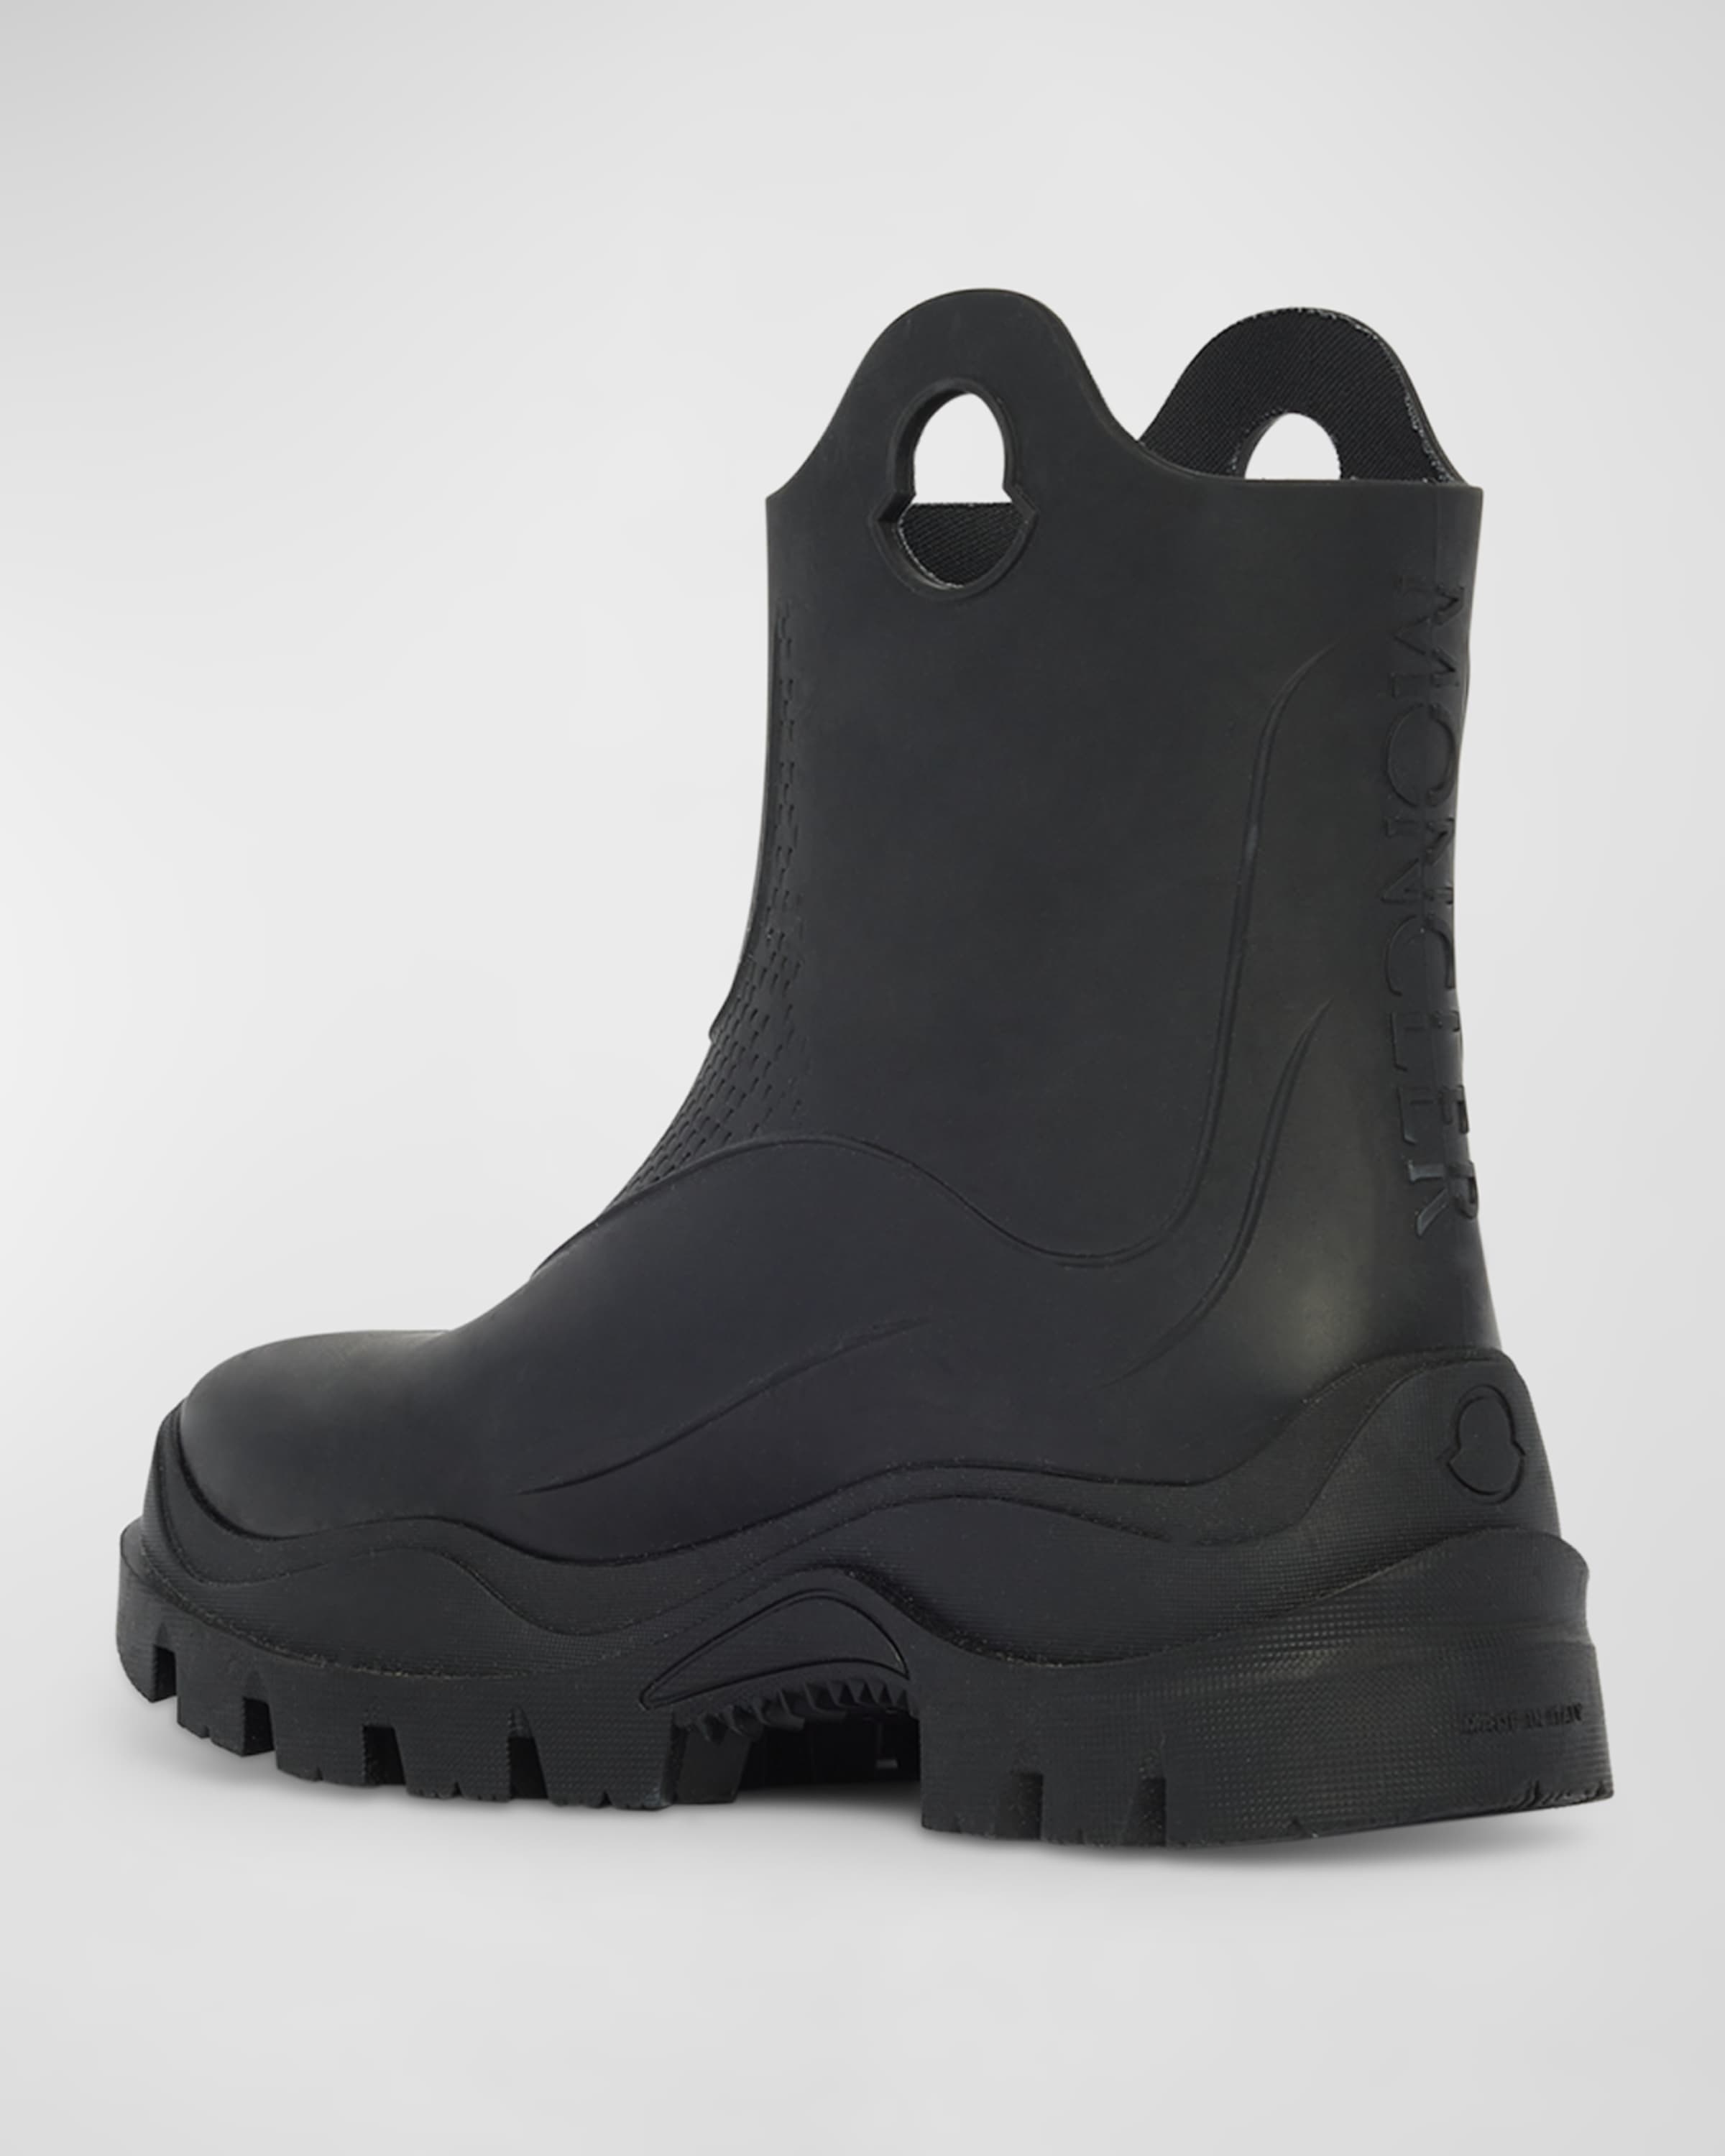 Misty Rubber Rain Boots - 2